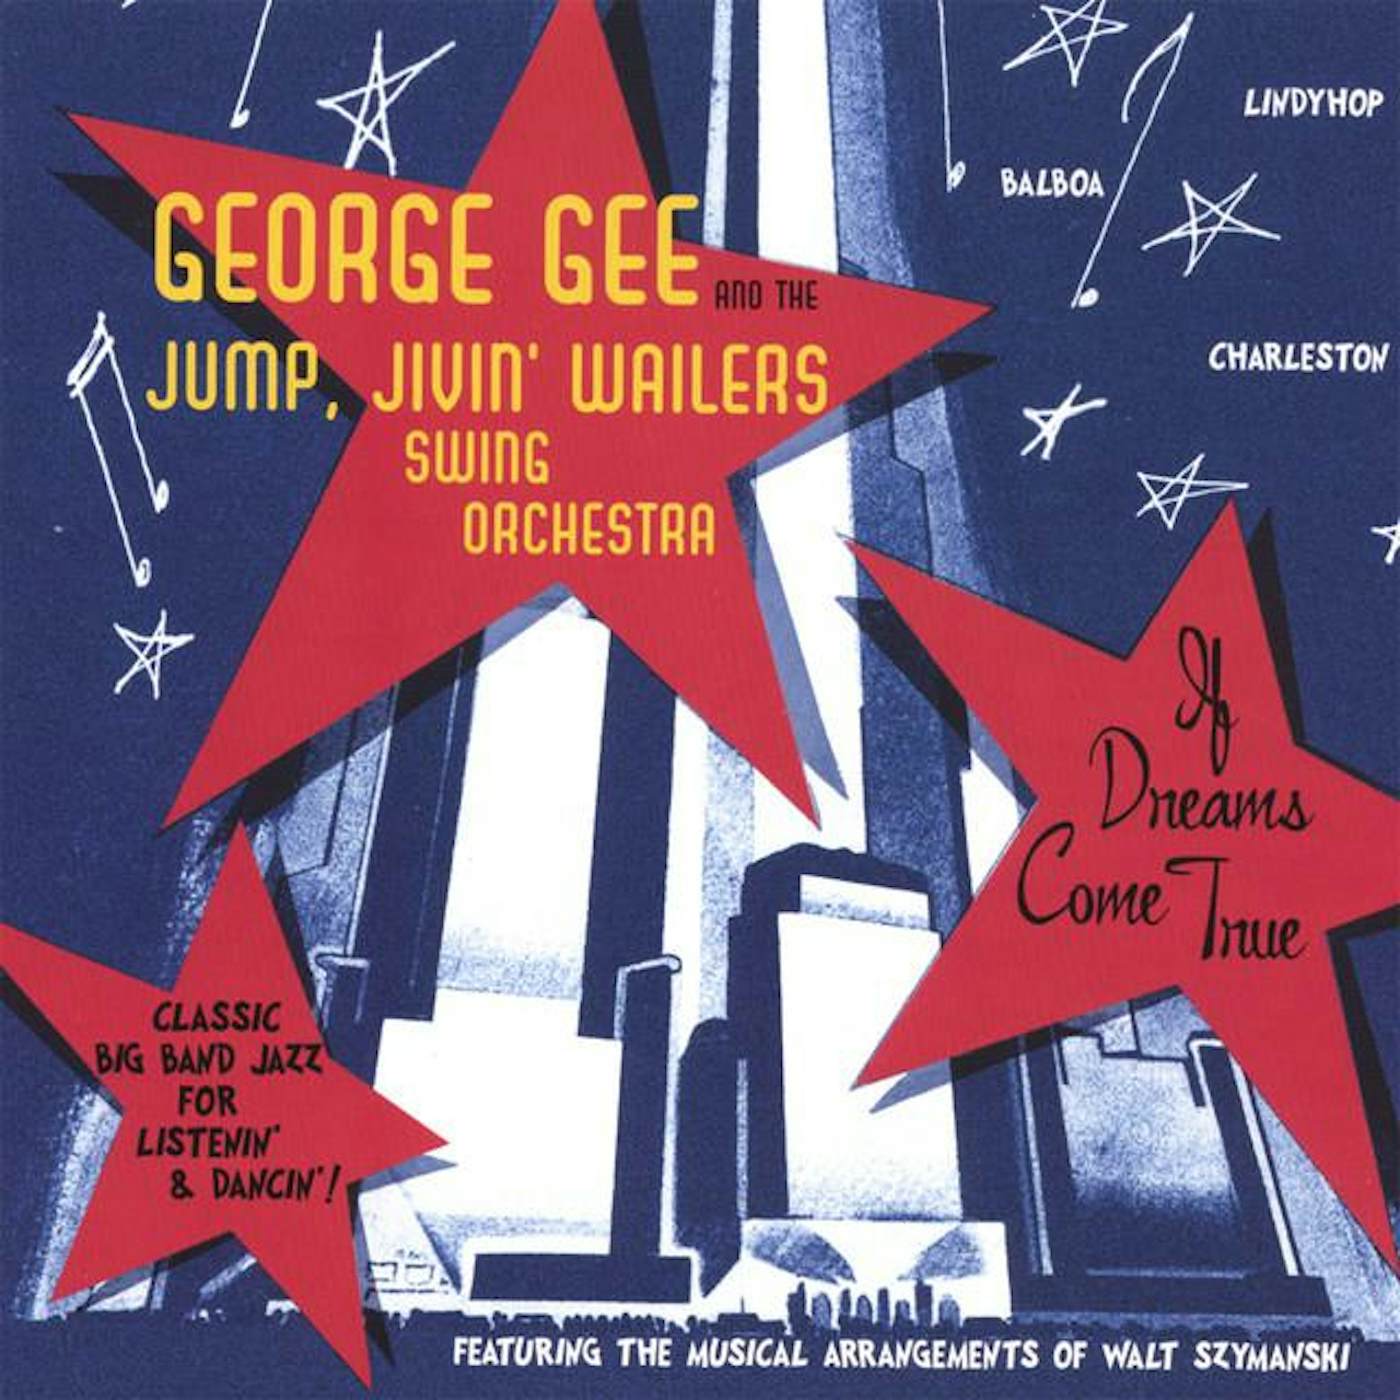 George Gee And The Jump Jivin' Wailers